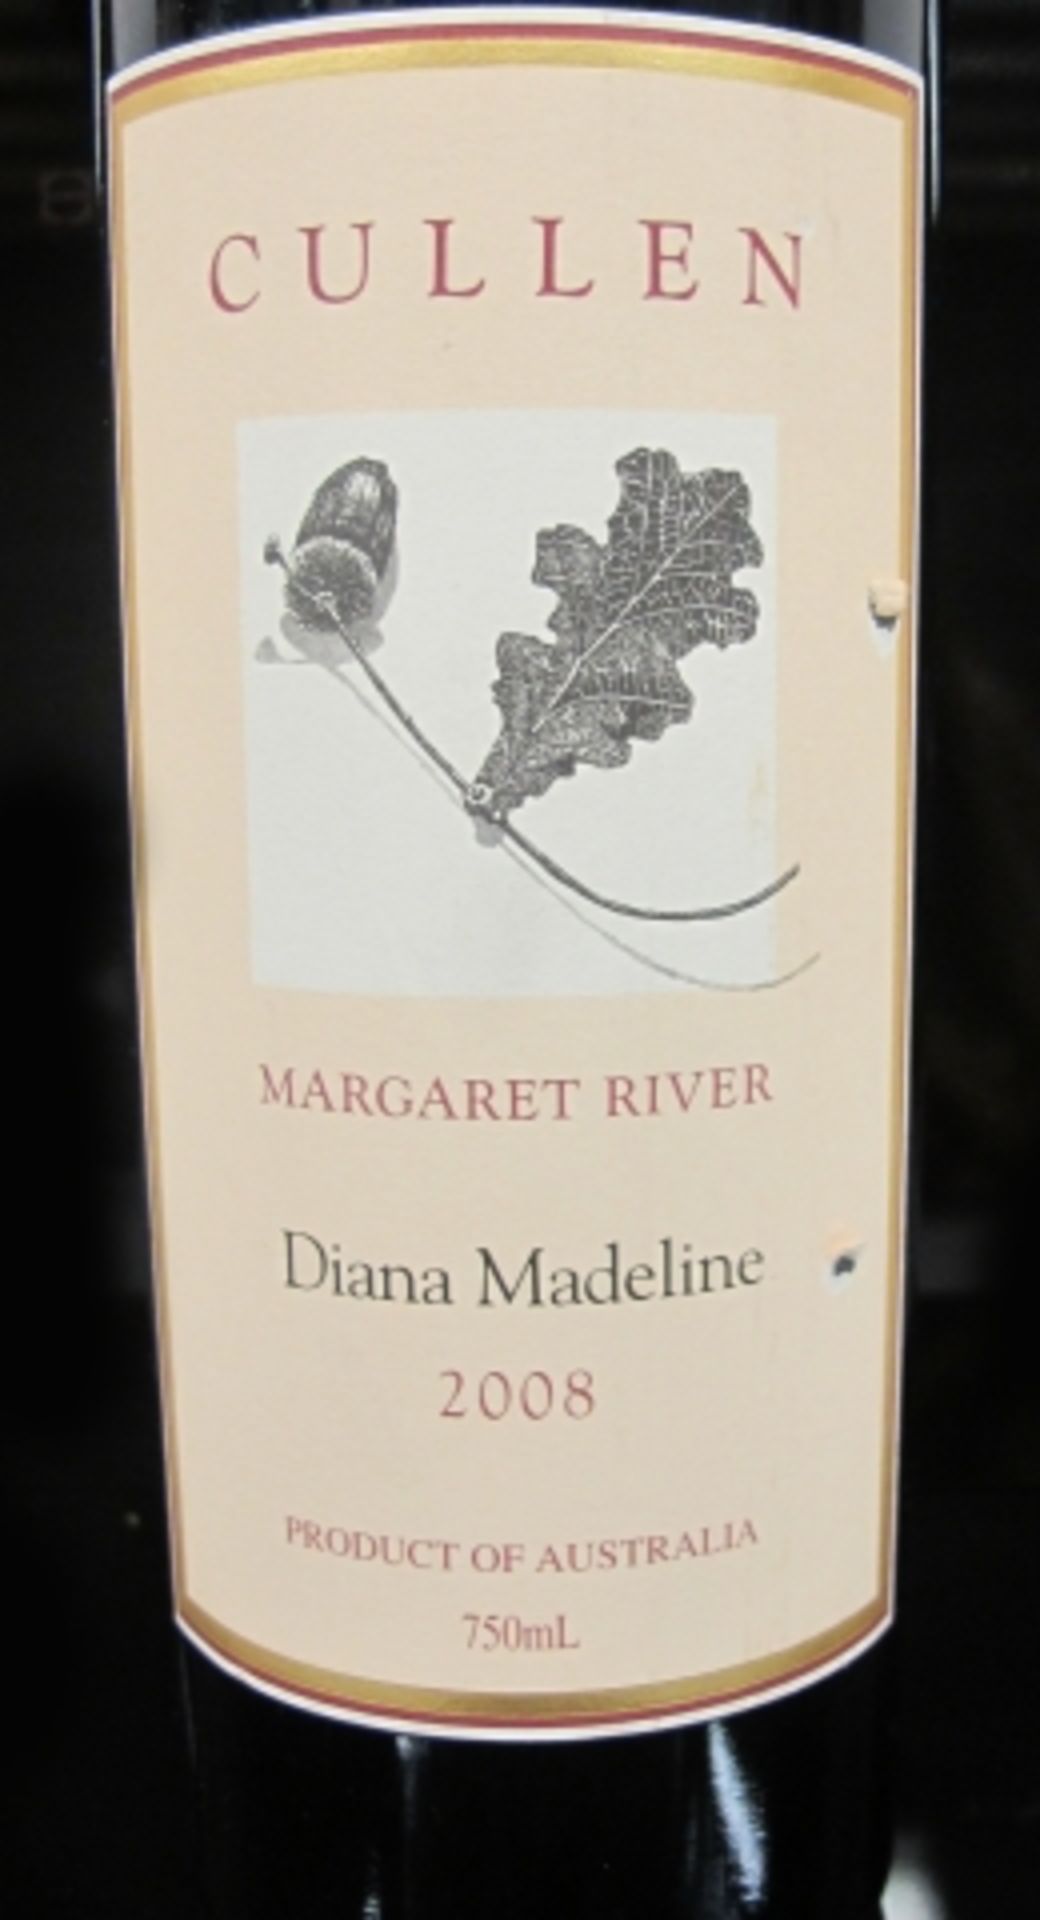 2008 Cullen Diana Madeline, Grape Variety Cabernet Sauvignon (86%), Merlot (14%), ABV 12%, Region - Image 2 of 3